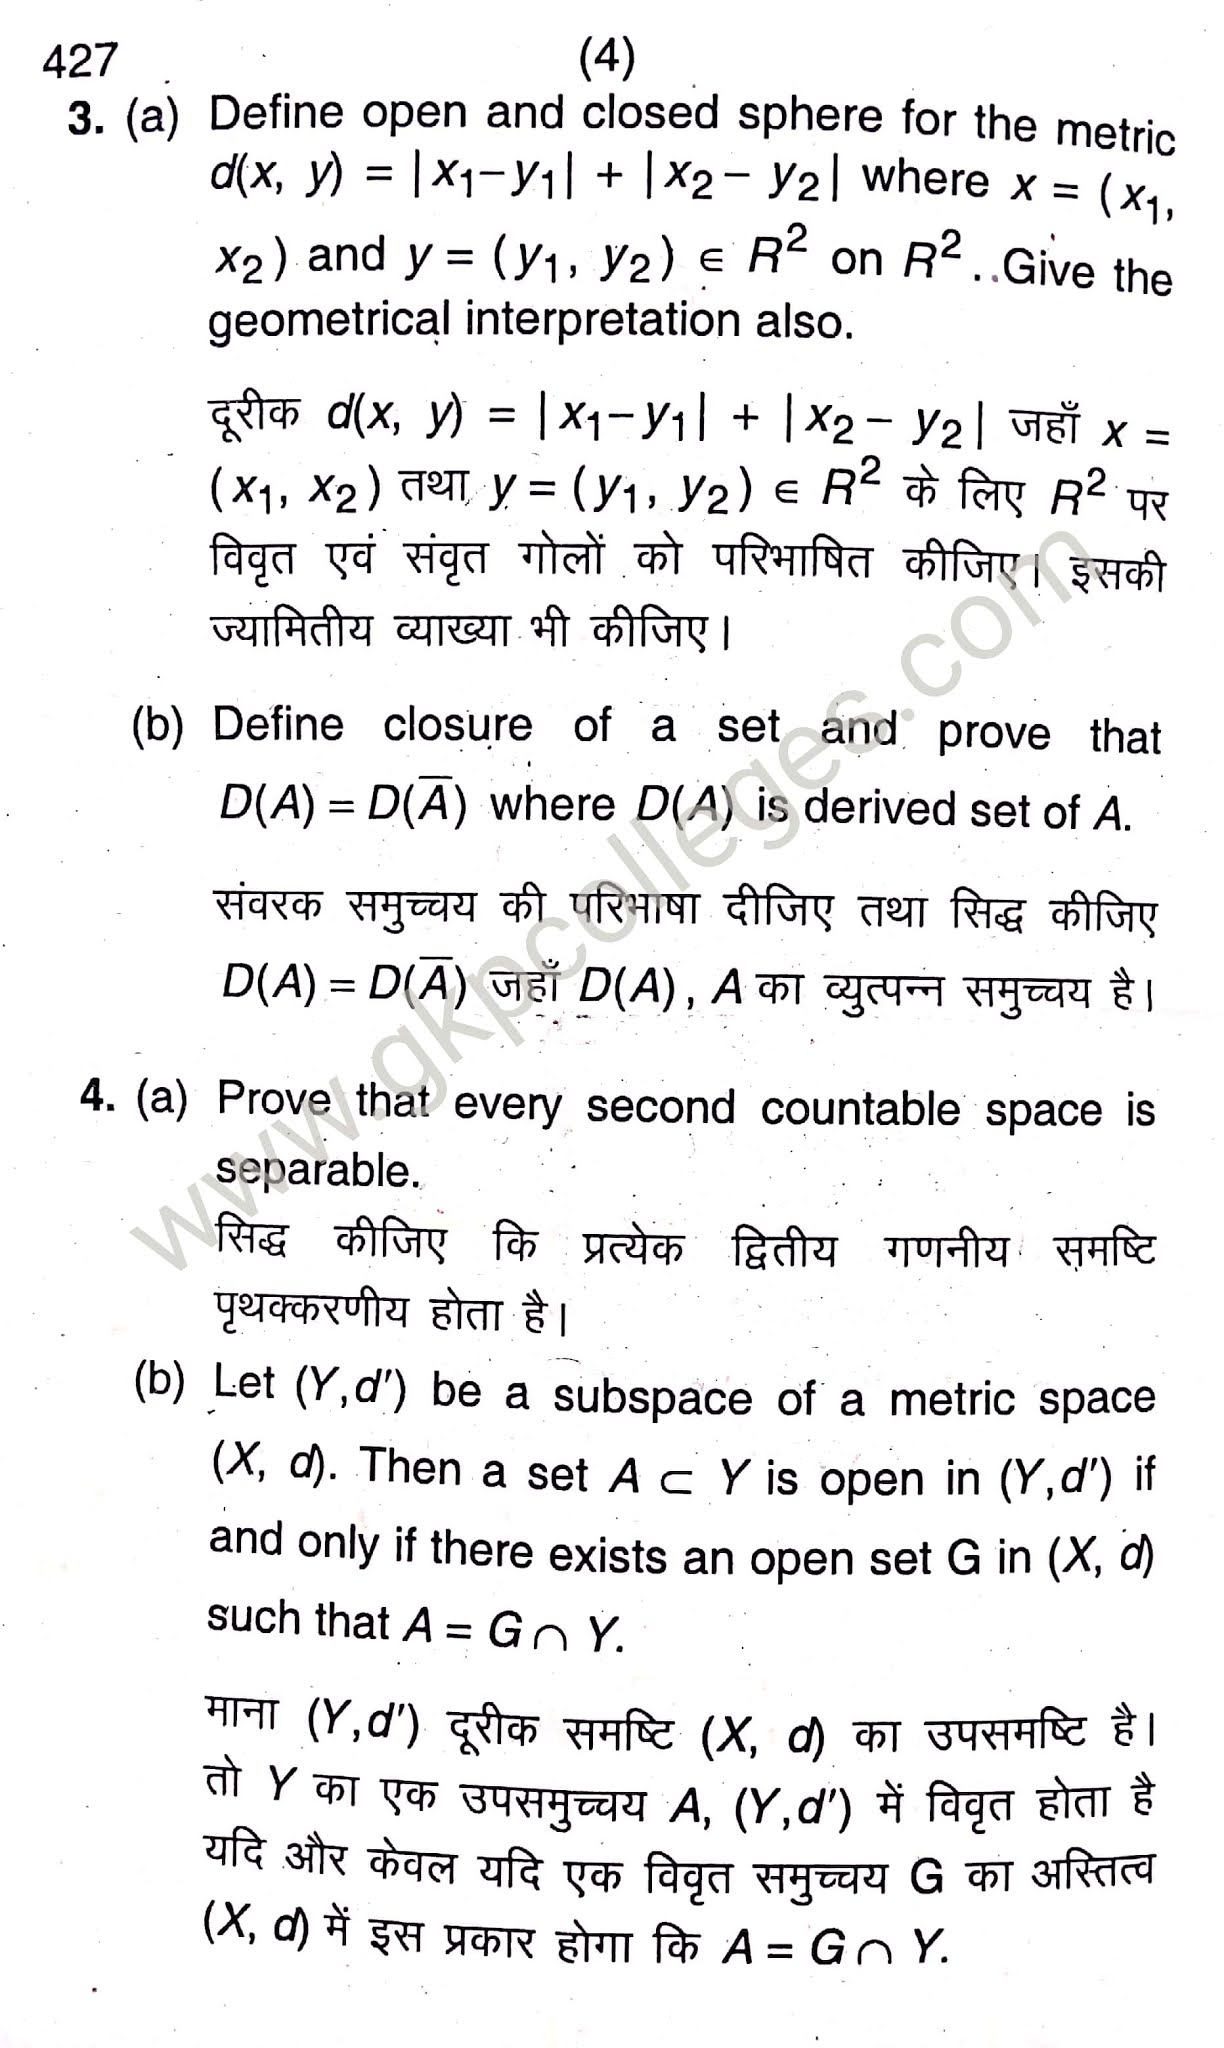 Metric Spaces, Mathematics Paper- 1st for B.Sc. 3rd year students, DDU Gorakhpur University Examination 2020